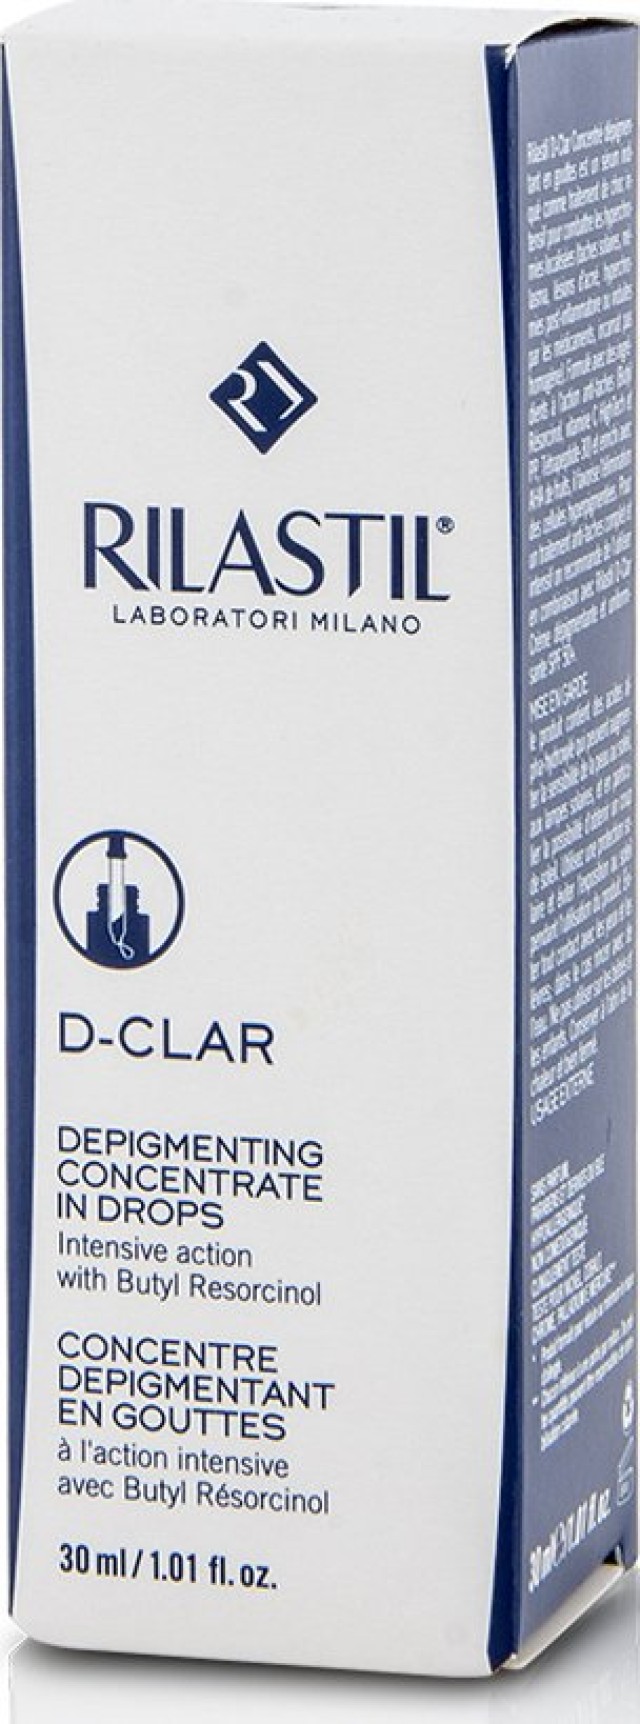 Rilastil D Clar Depigmenting Concetrate Serum In Drops Συμπυκνωμένος Ορός Με Αποχρωματιστική Δράση 30ml